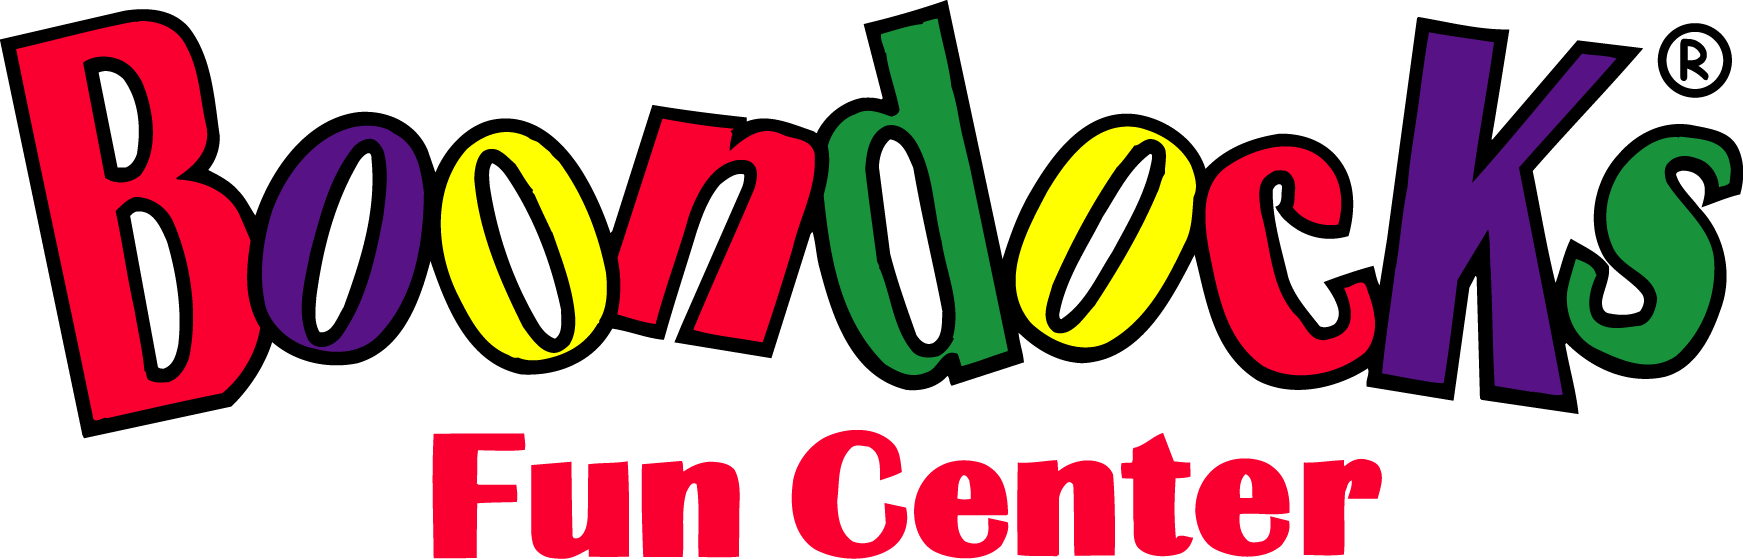 Boondocks Fun Centerwdd - Boondocks Fun Center (1743x559)